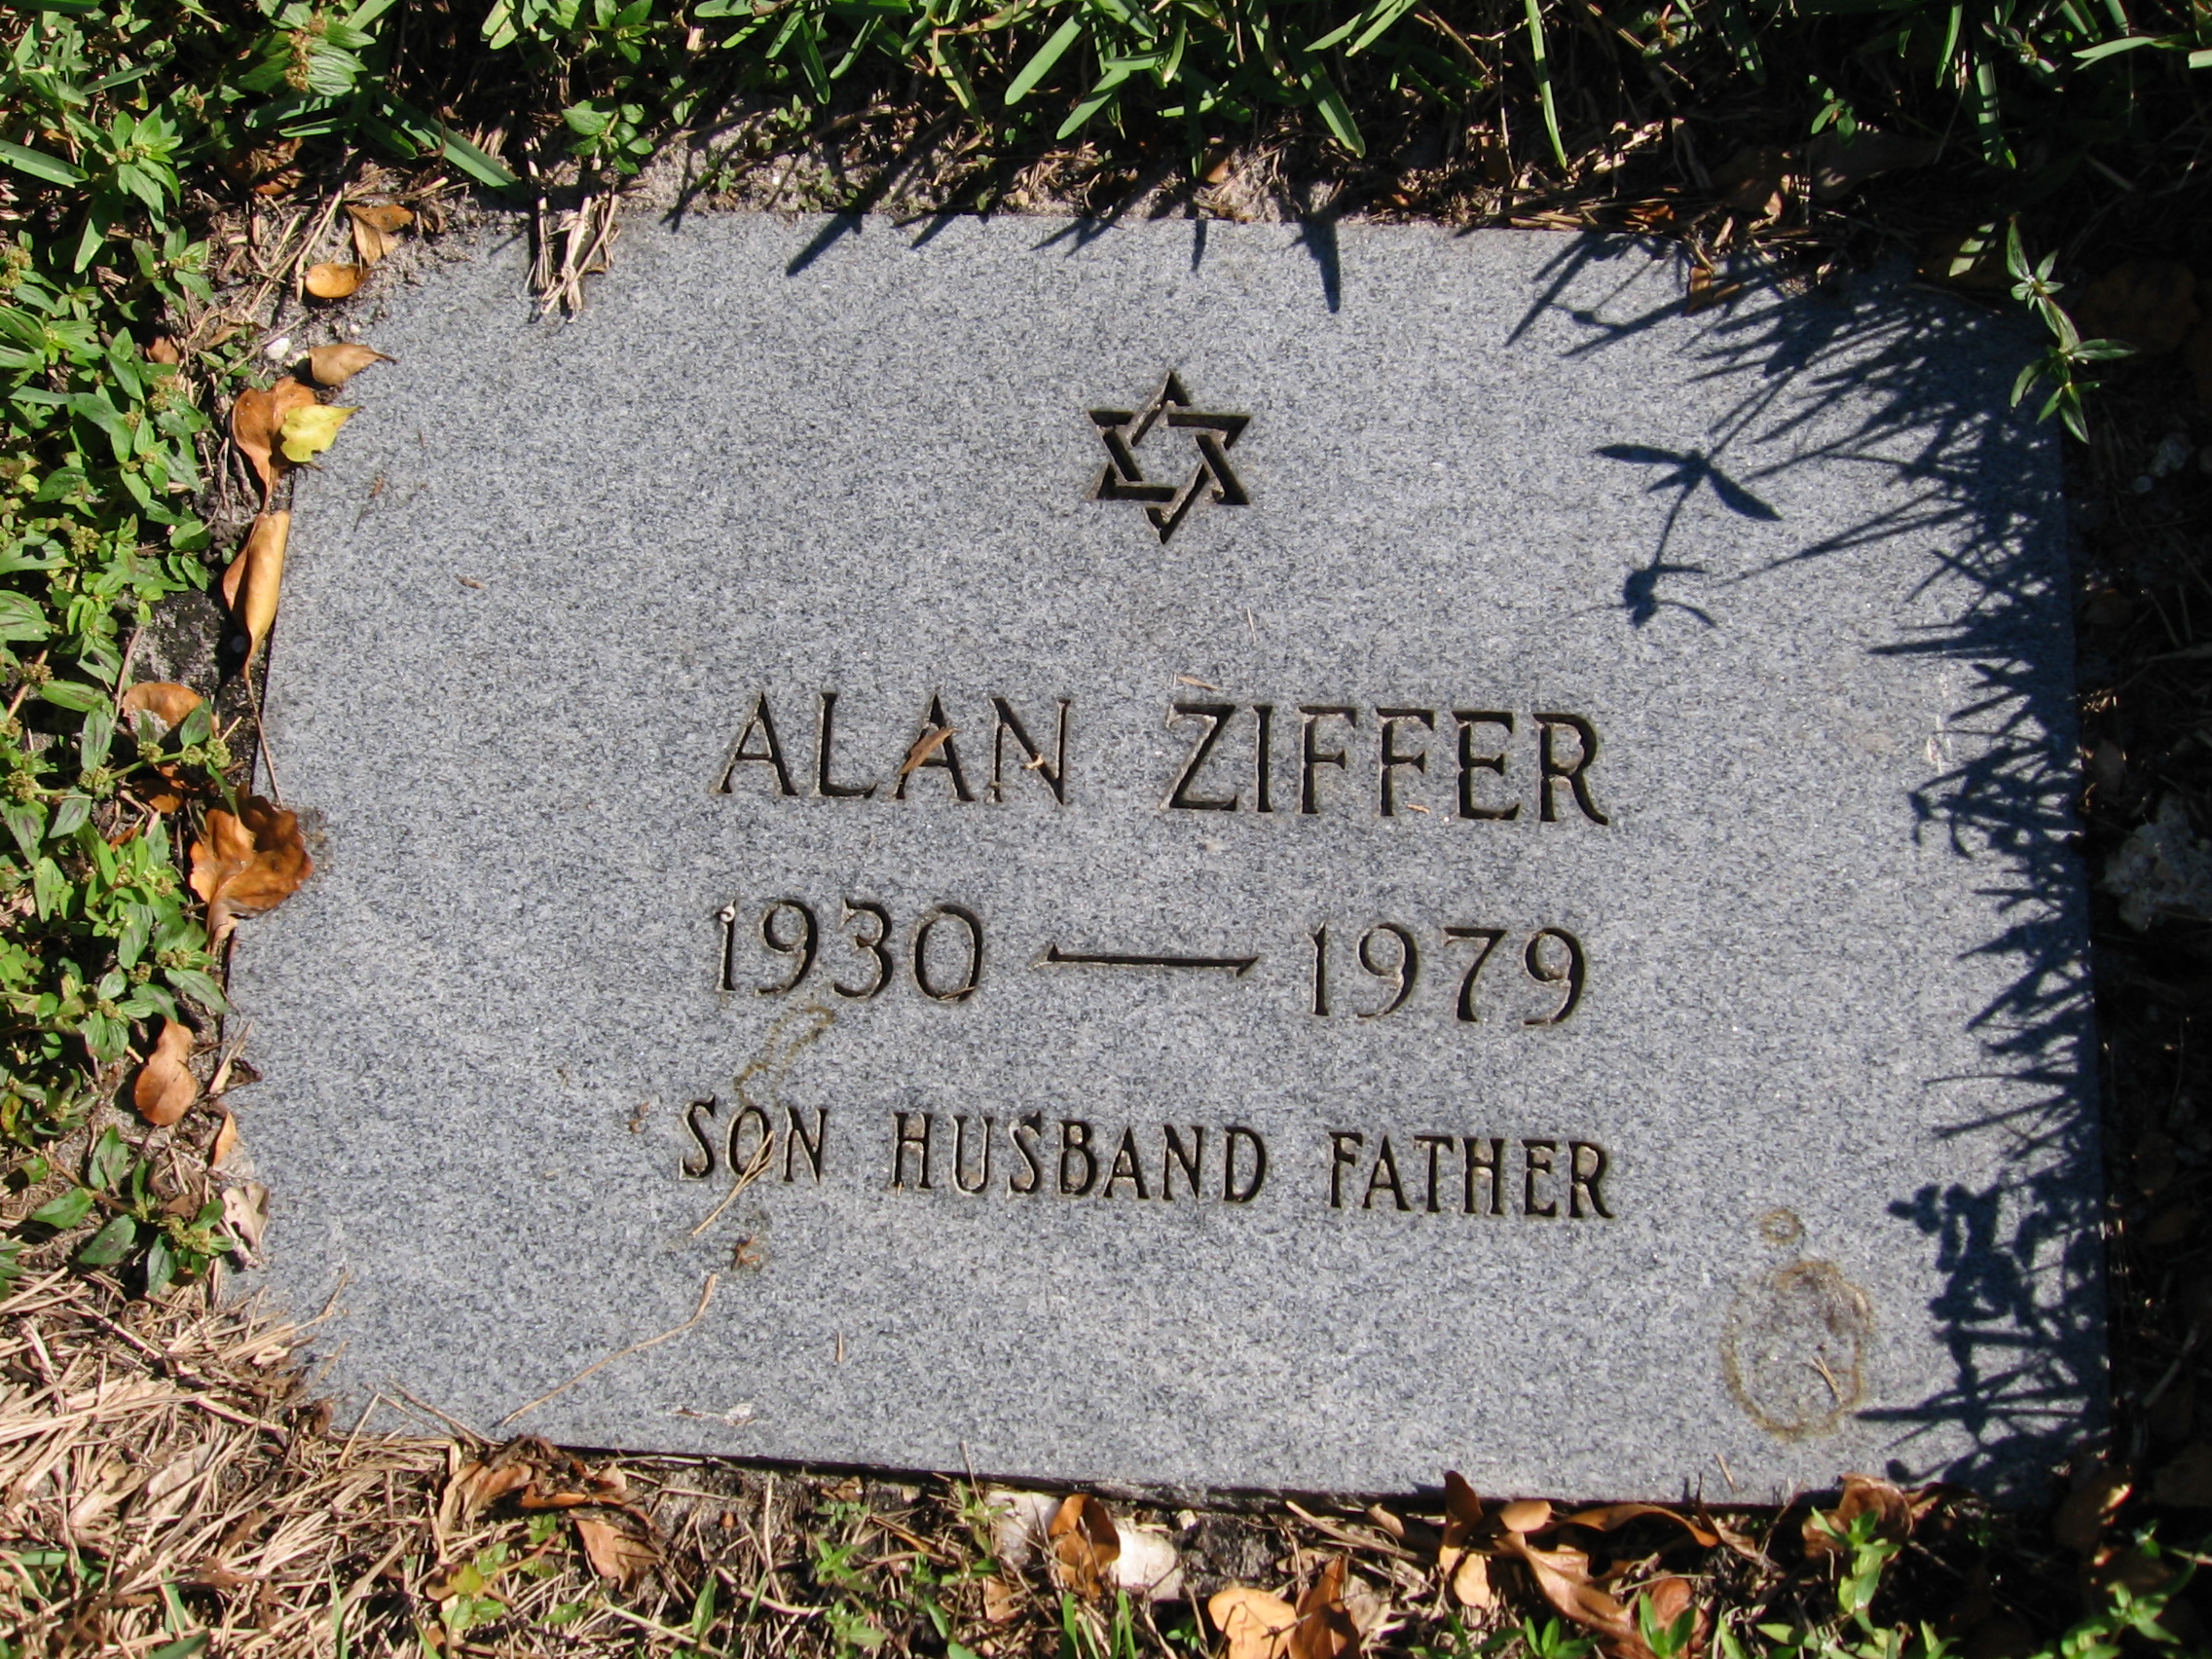 Alan Ziffer